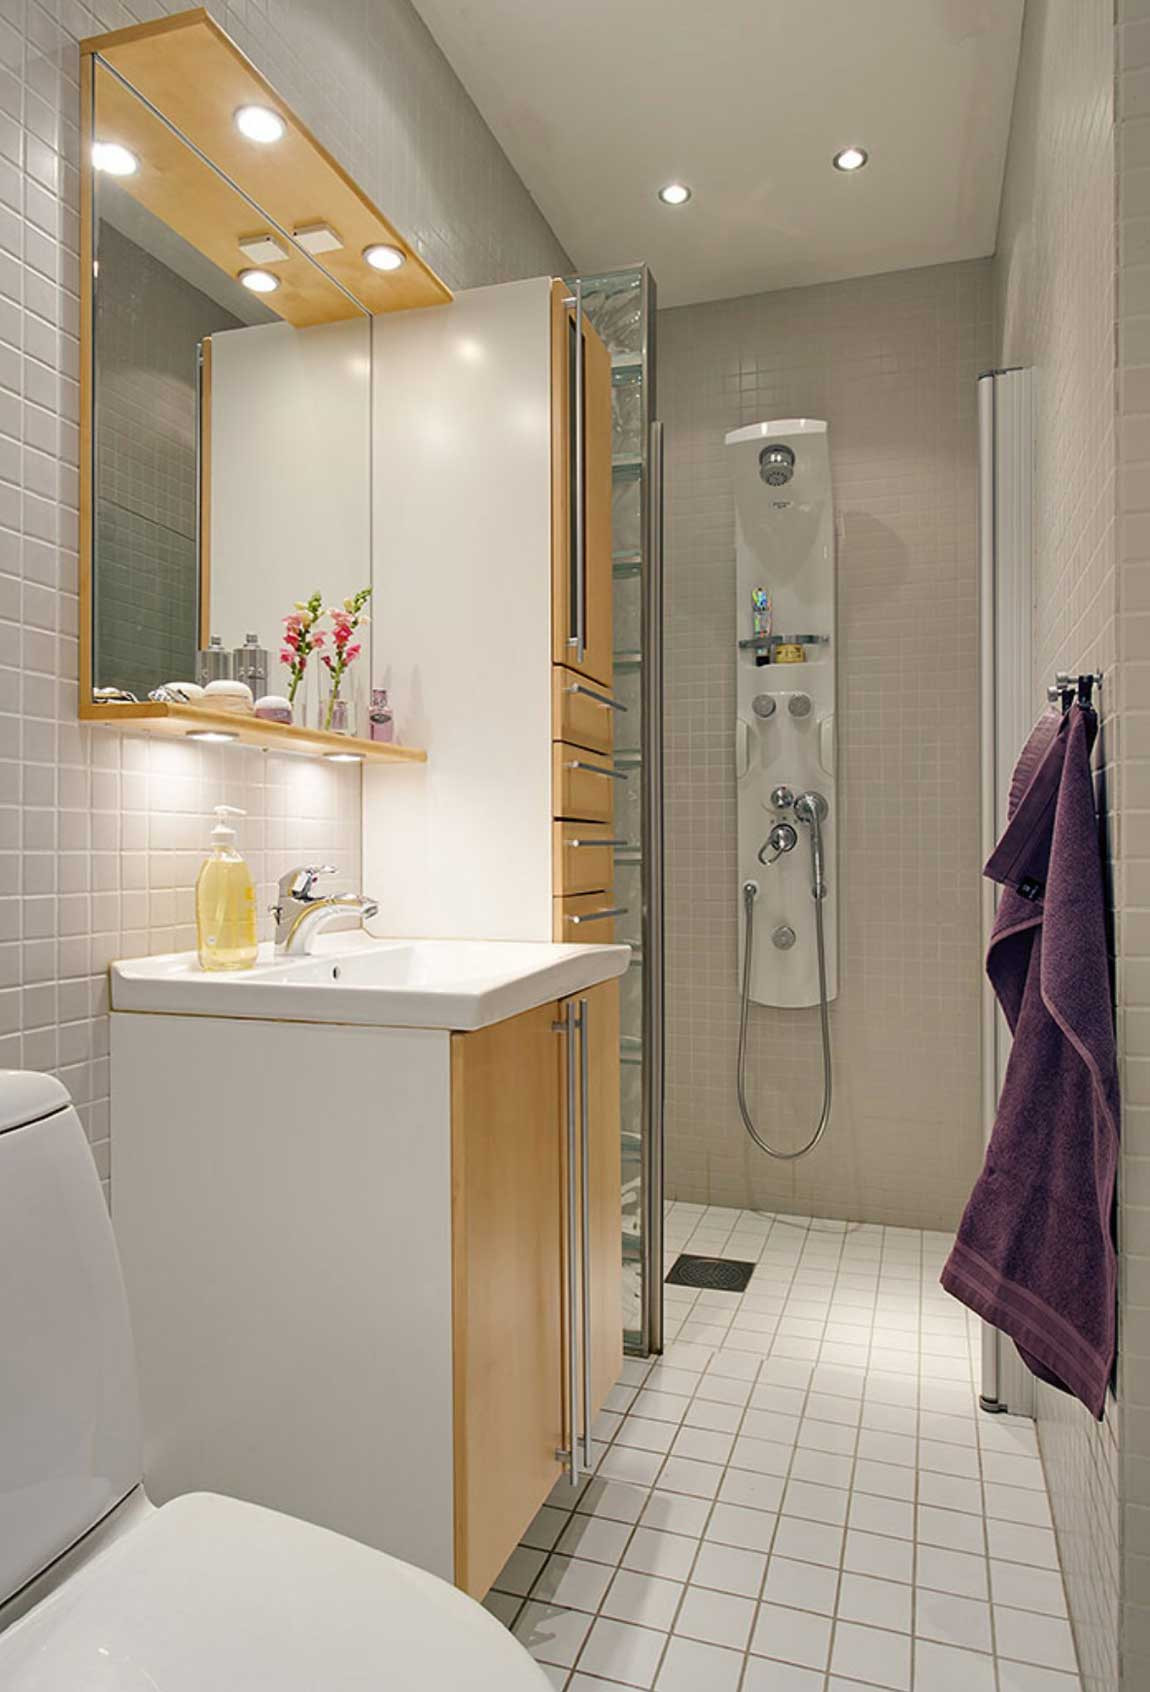 Apartment Bathroom Decorating Ideas
 The Most fortable Bathroom Decorating Ideas Amaza Design